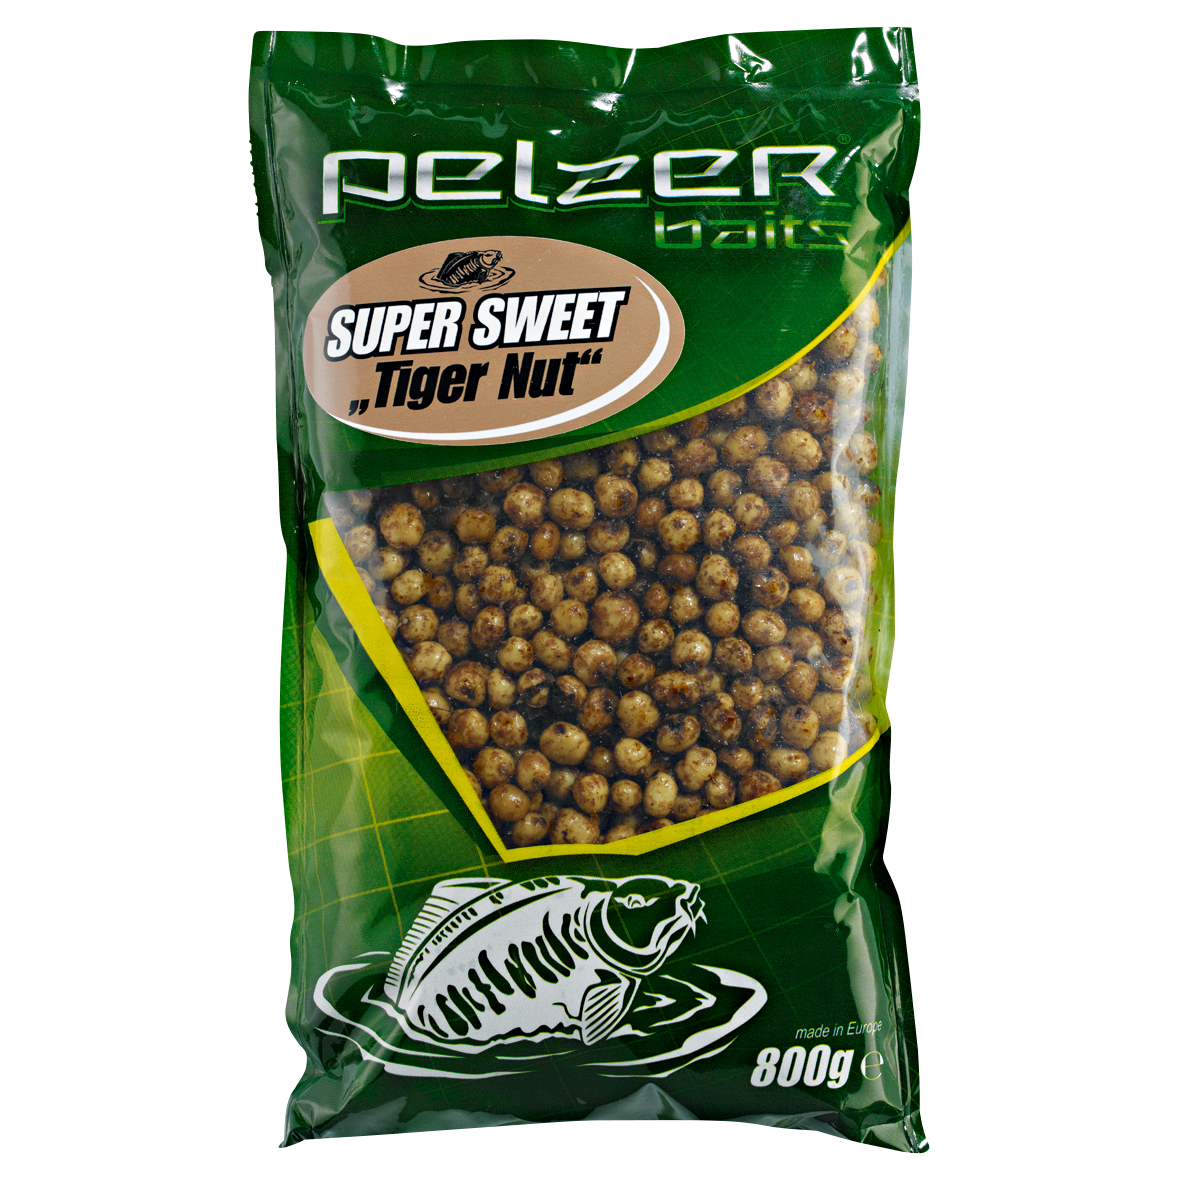 Pelzer Carp Feed Super Sweet Tigernuts at low prices